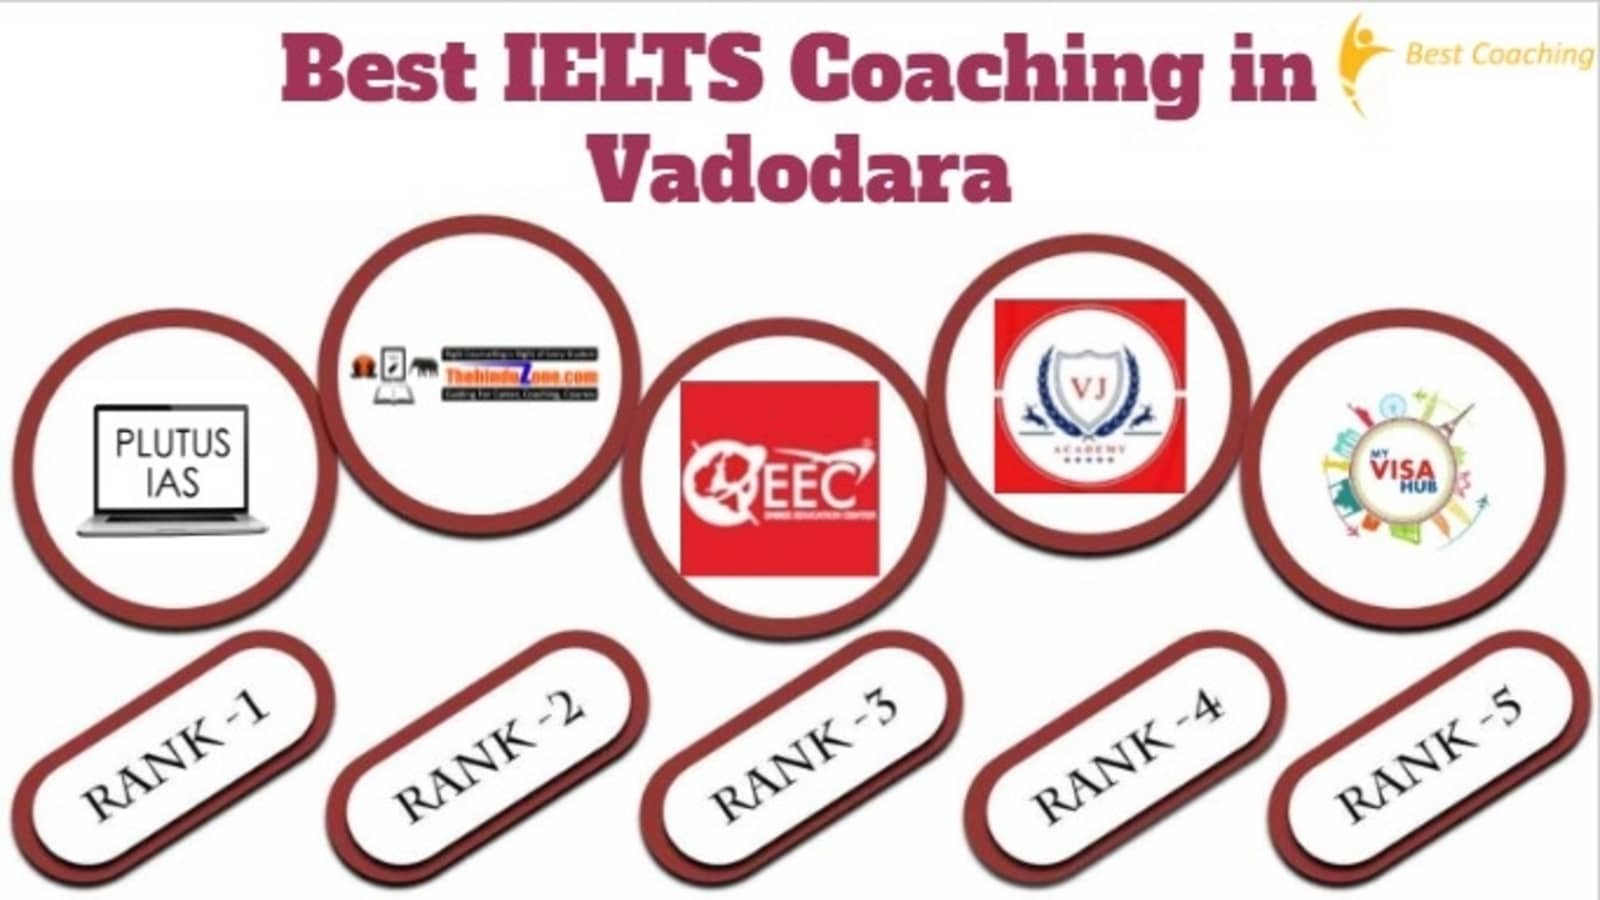 Best IELTS Coaching in Vadodara